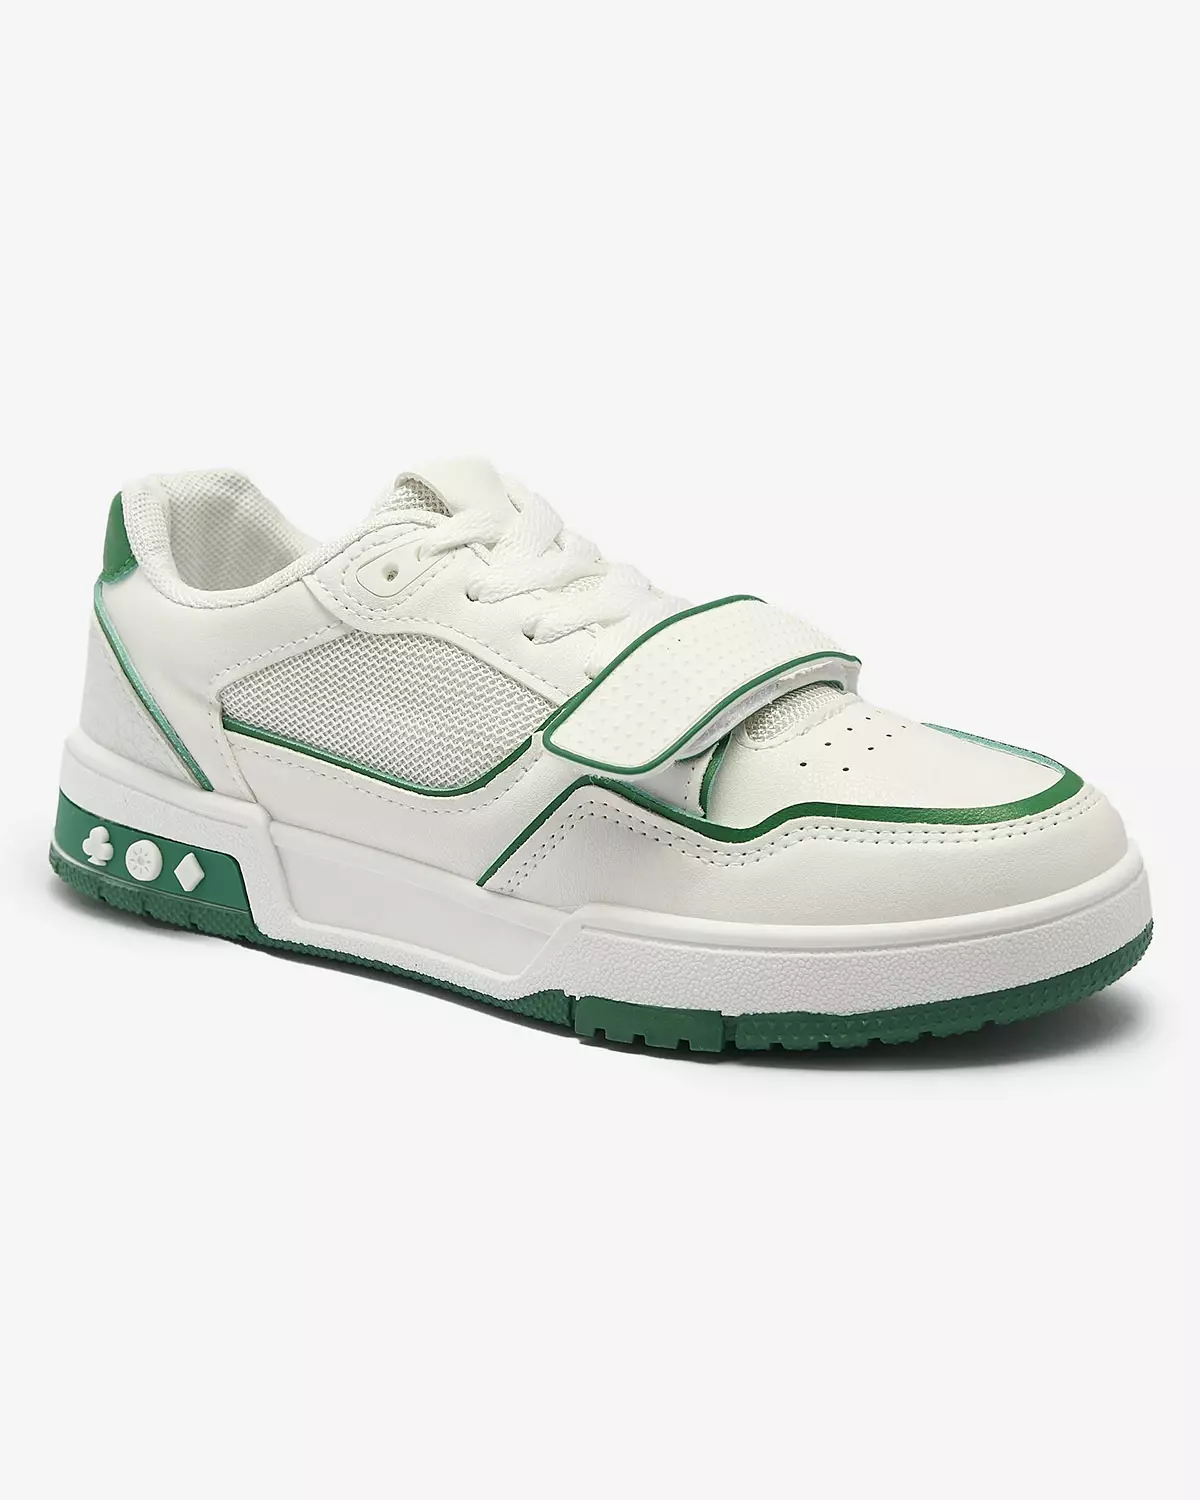 Dámske športové tenisky v bielo-zelenej farbe Xirrat- Obuv